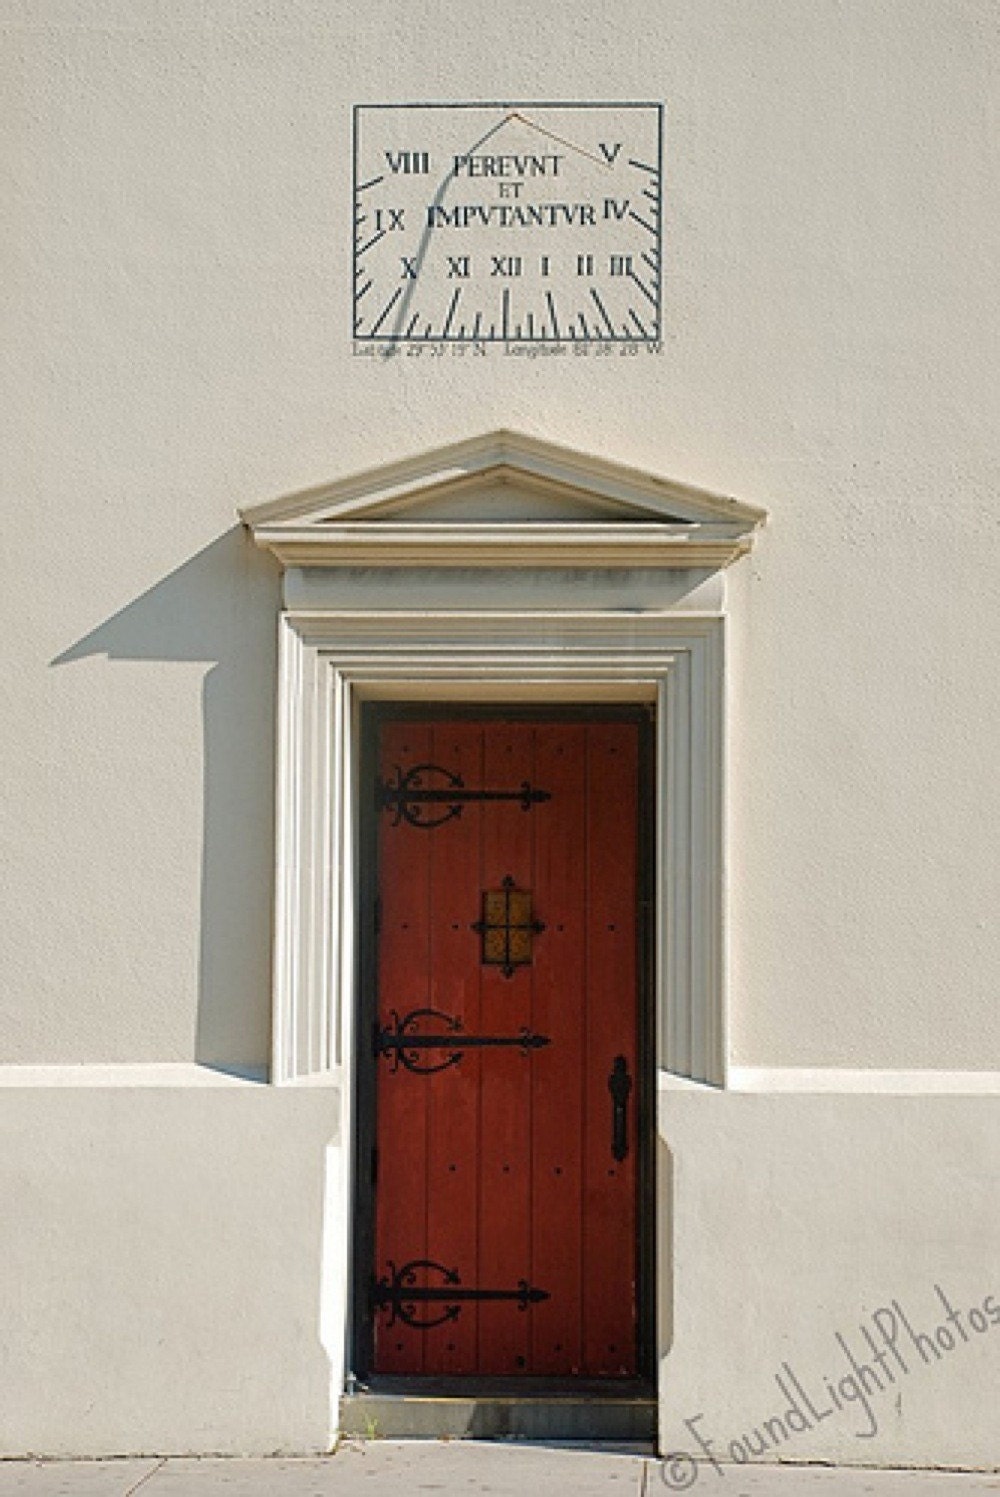 St. Augustine Red Door  8x12 Photograph